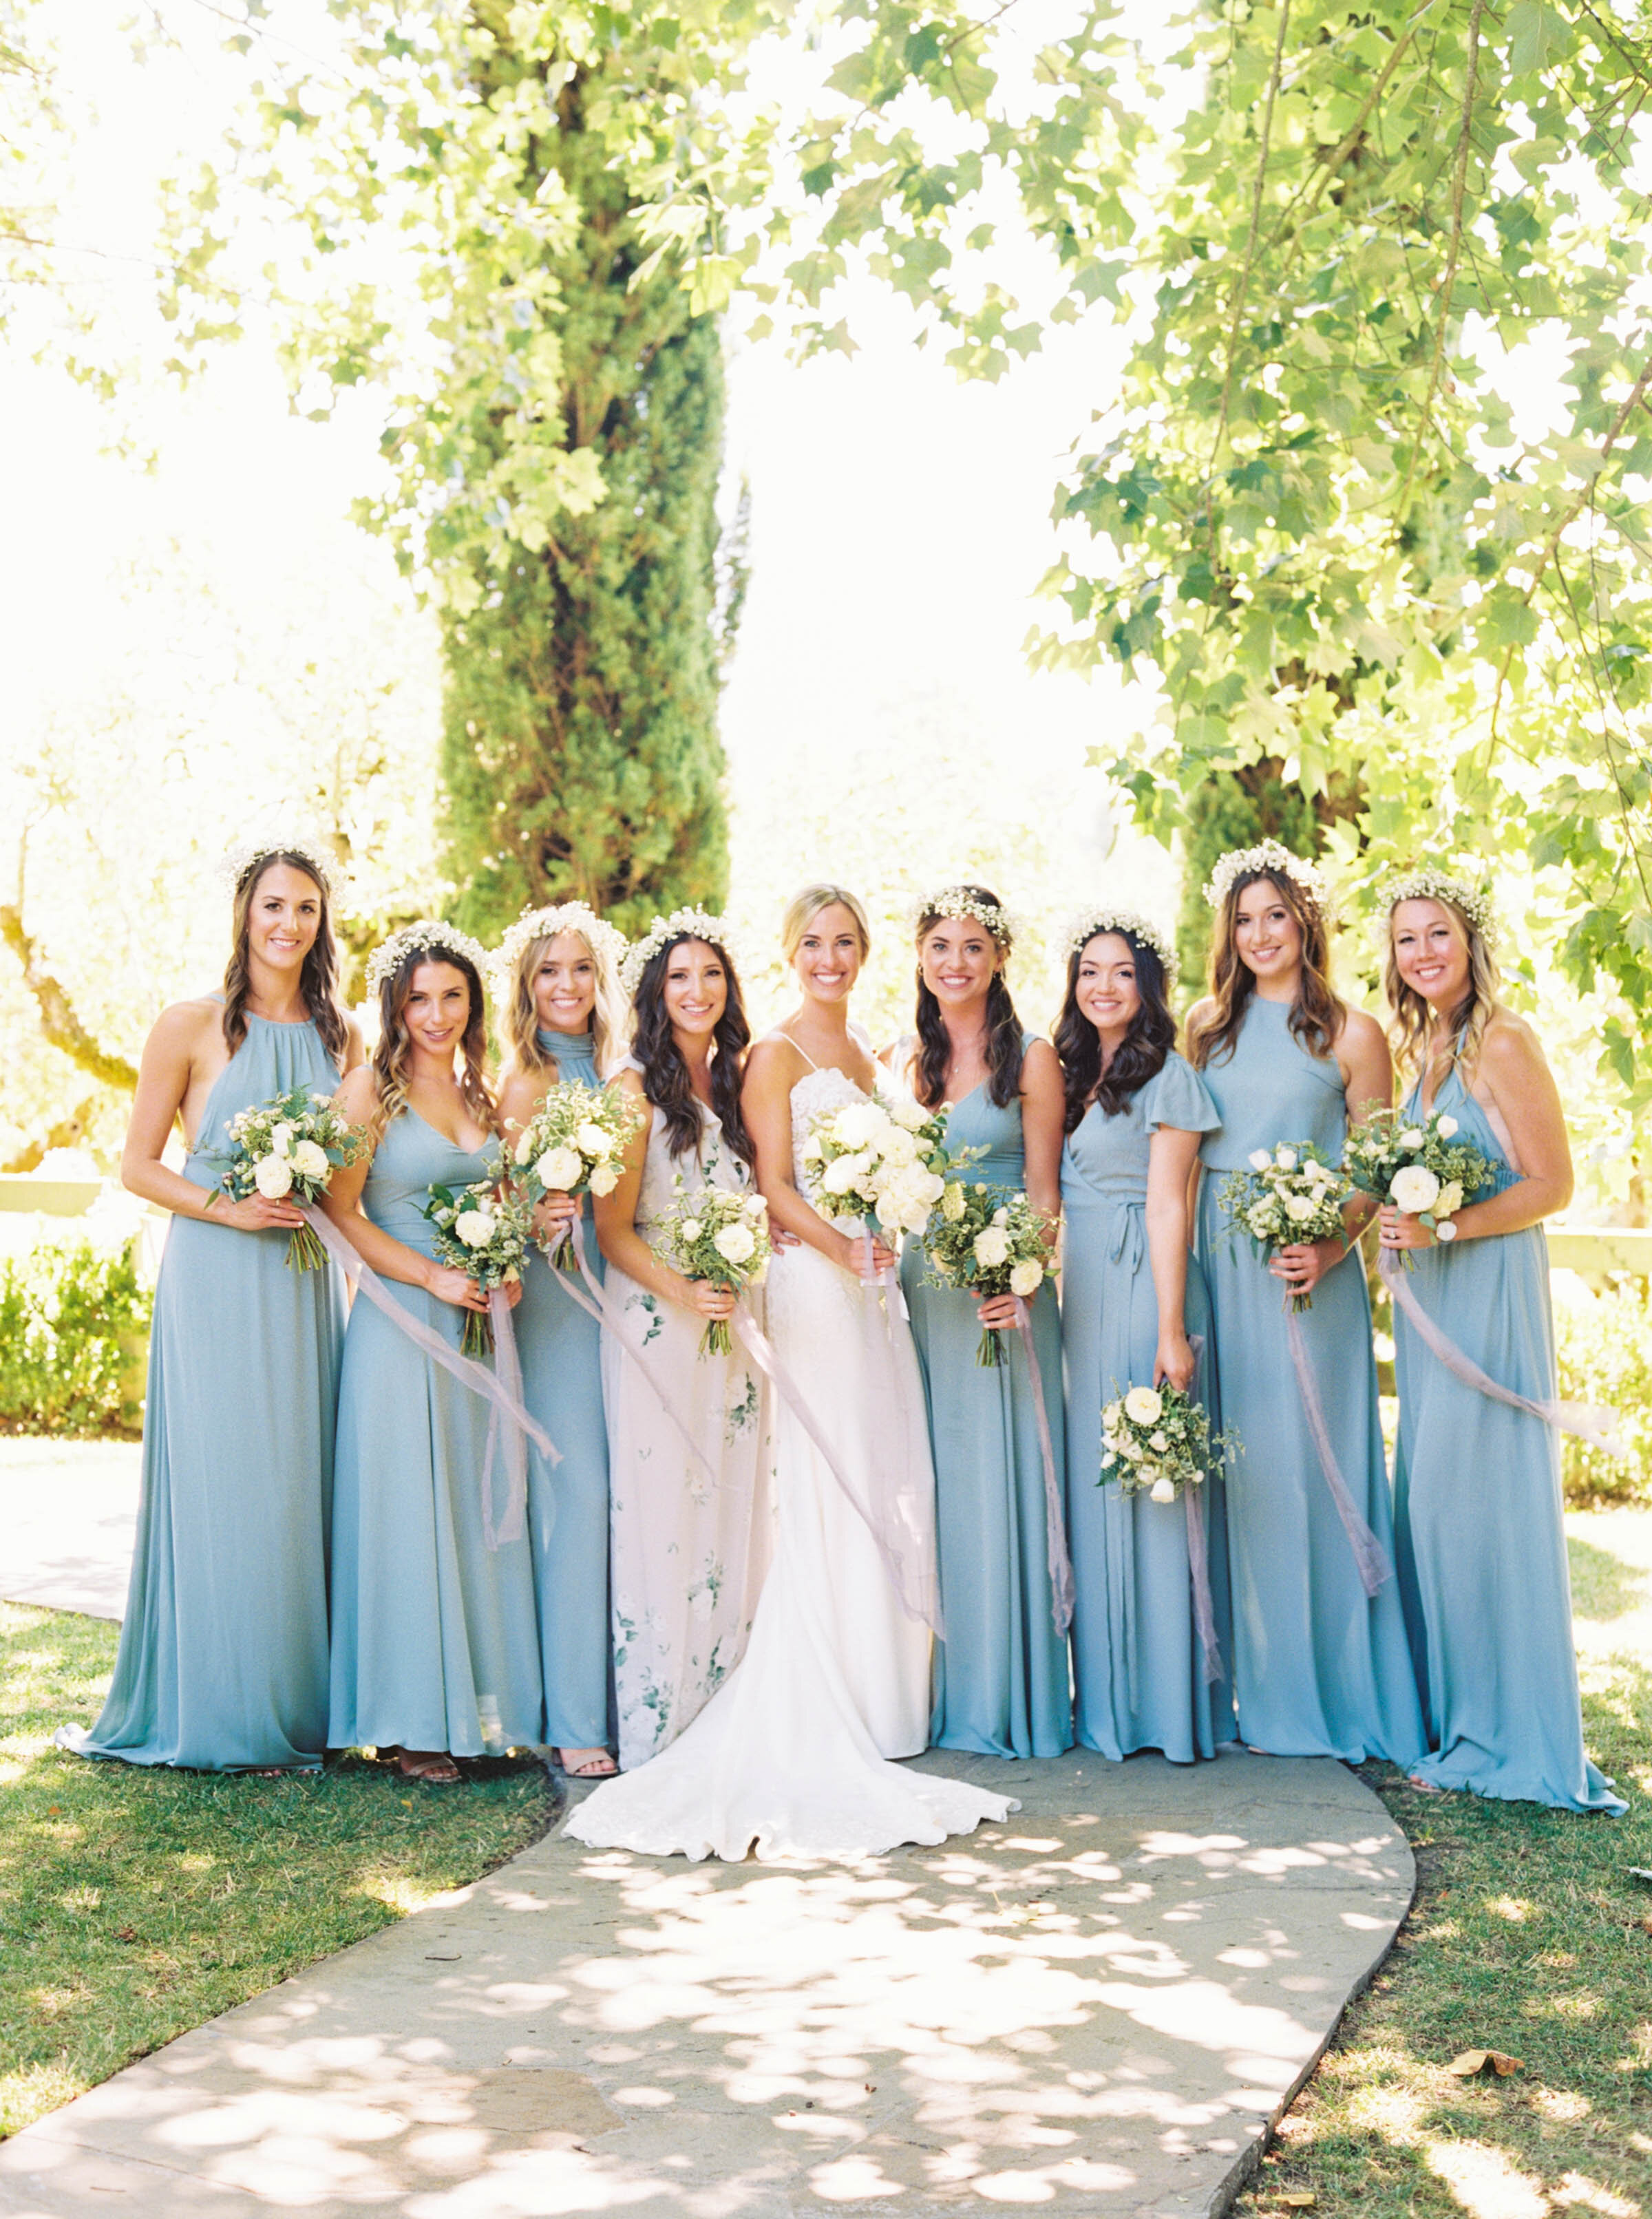 Jill & Cody's Sebastopol Wedding - oliviamarshall.com